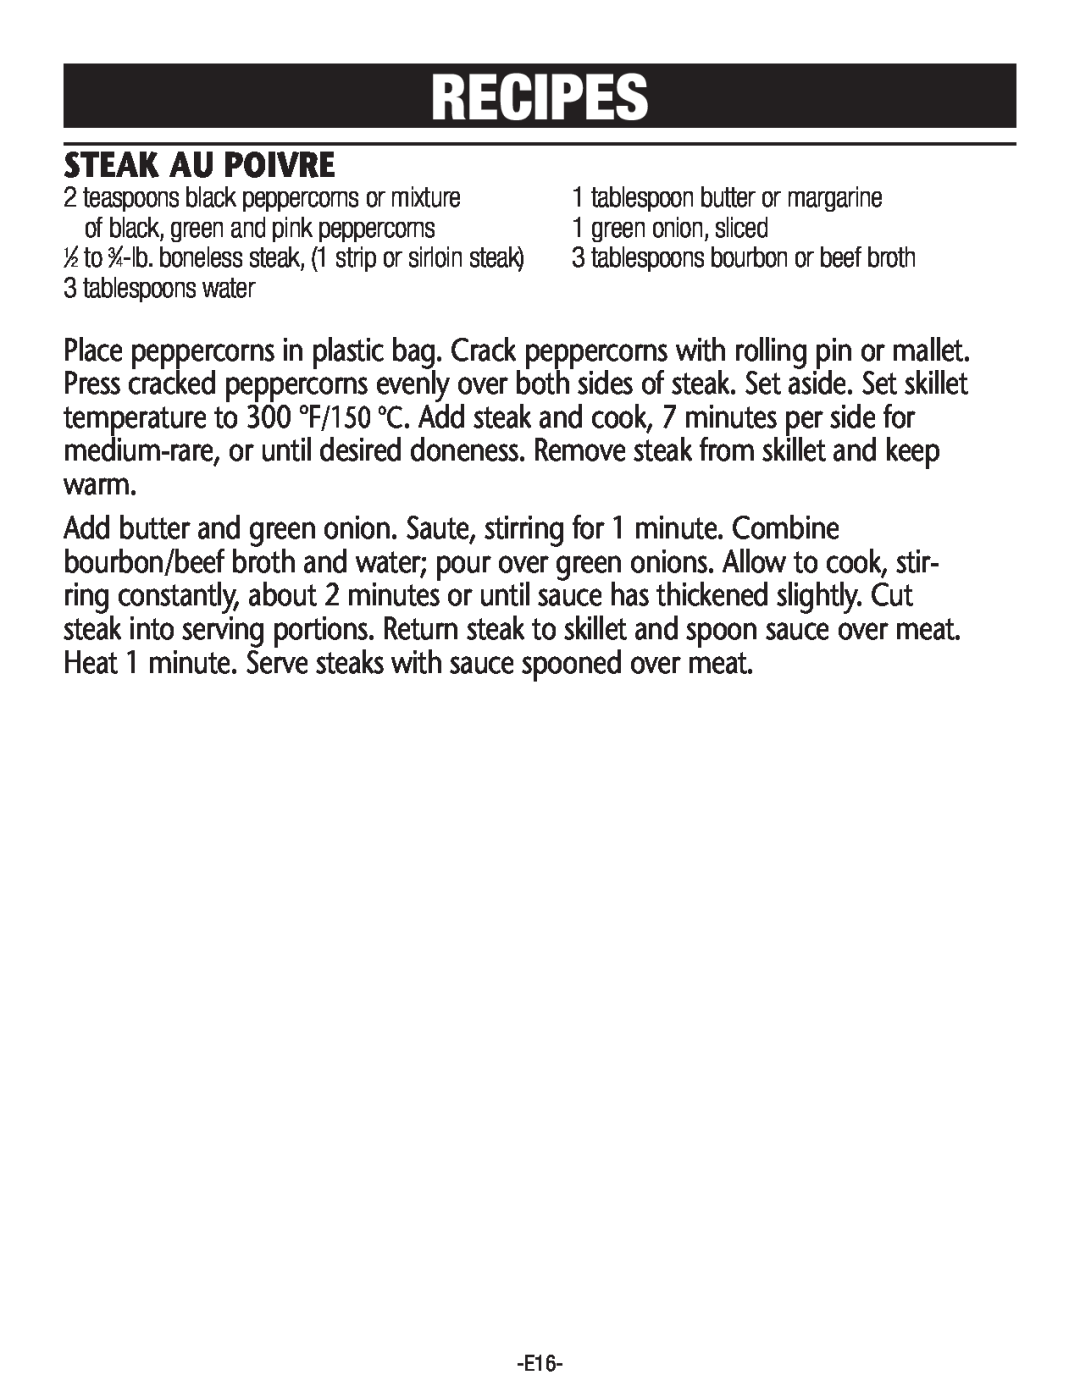 Rival S160 manual Recipes, Steak Au Poivre, teaspoonsblack peppercornsor mixture, of black,green and pink peppercorns 